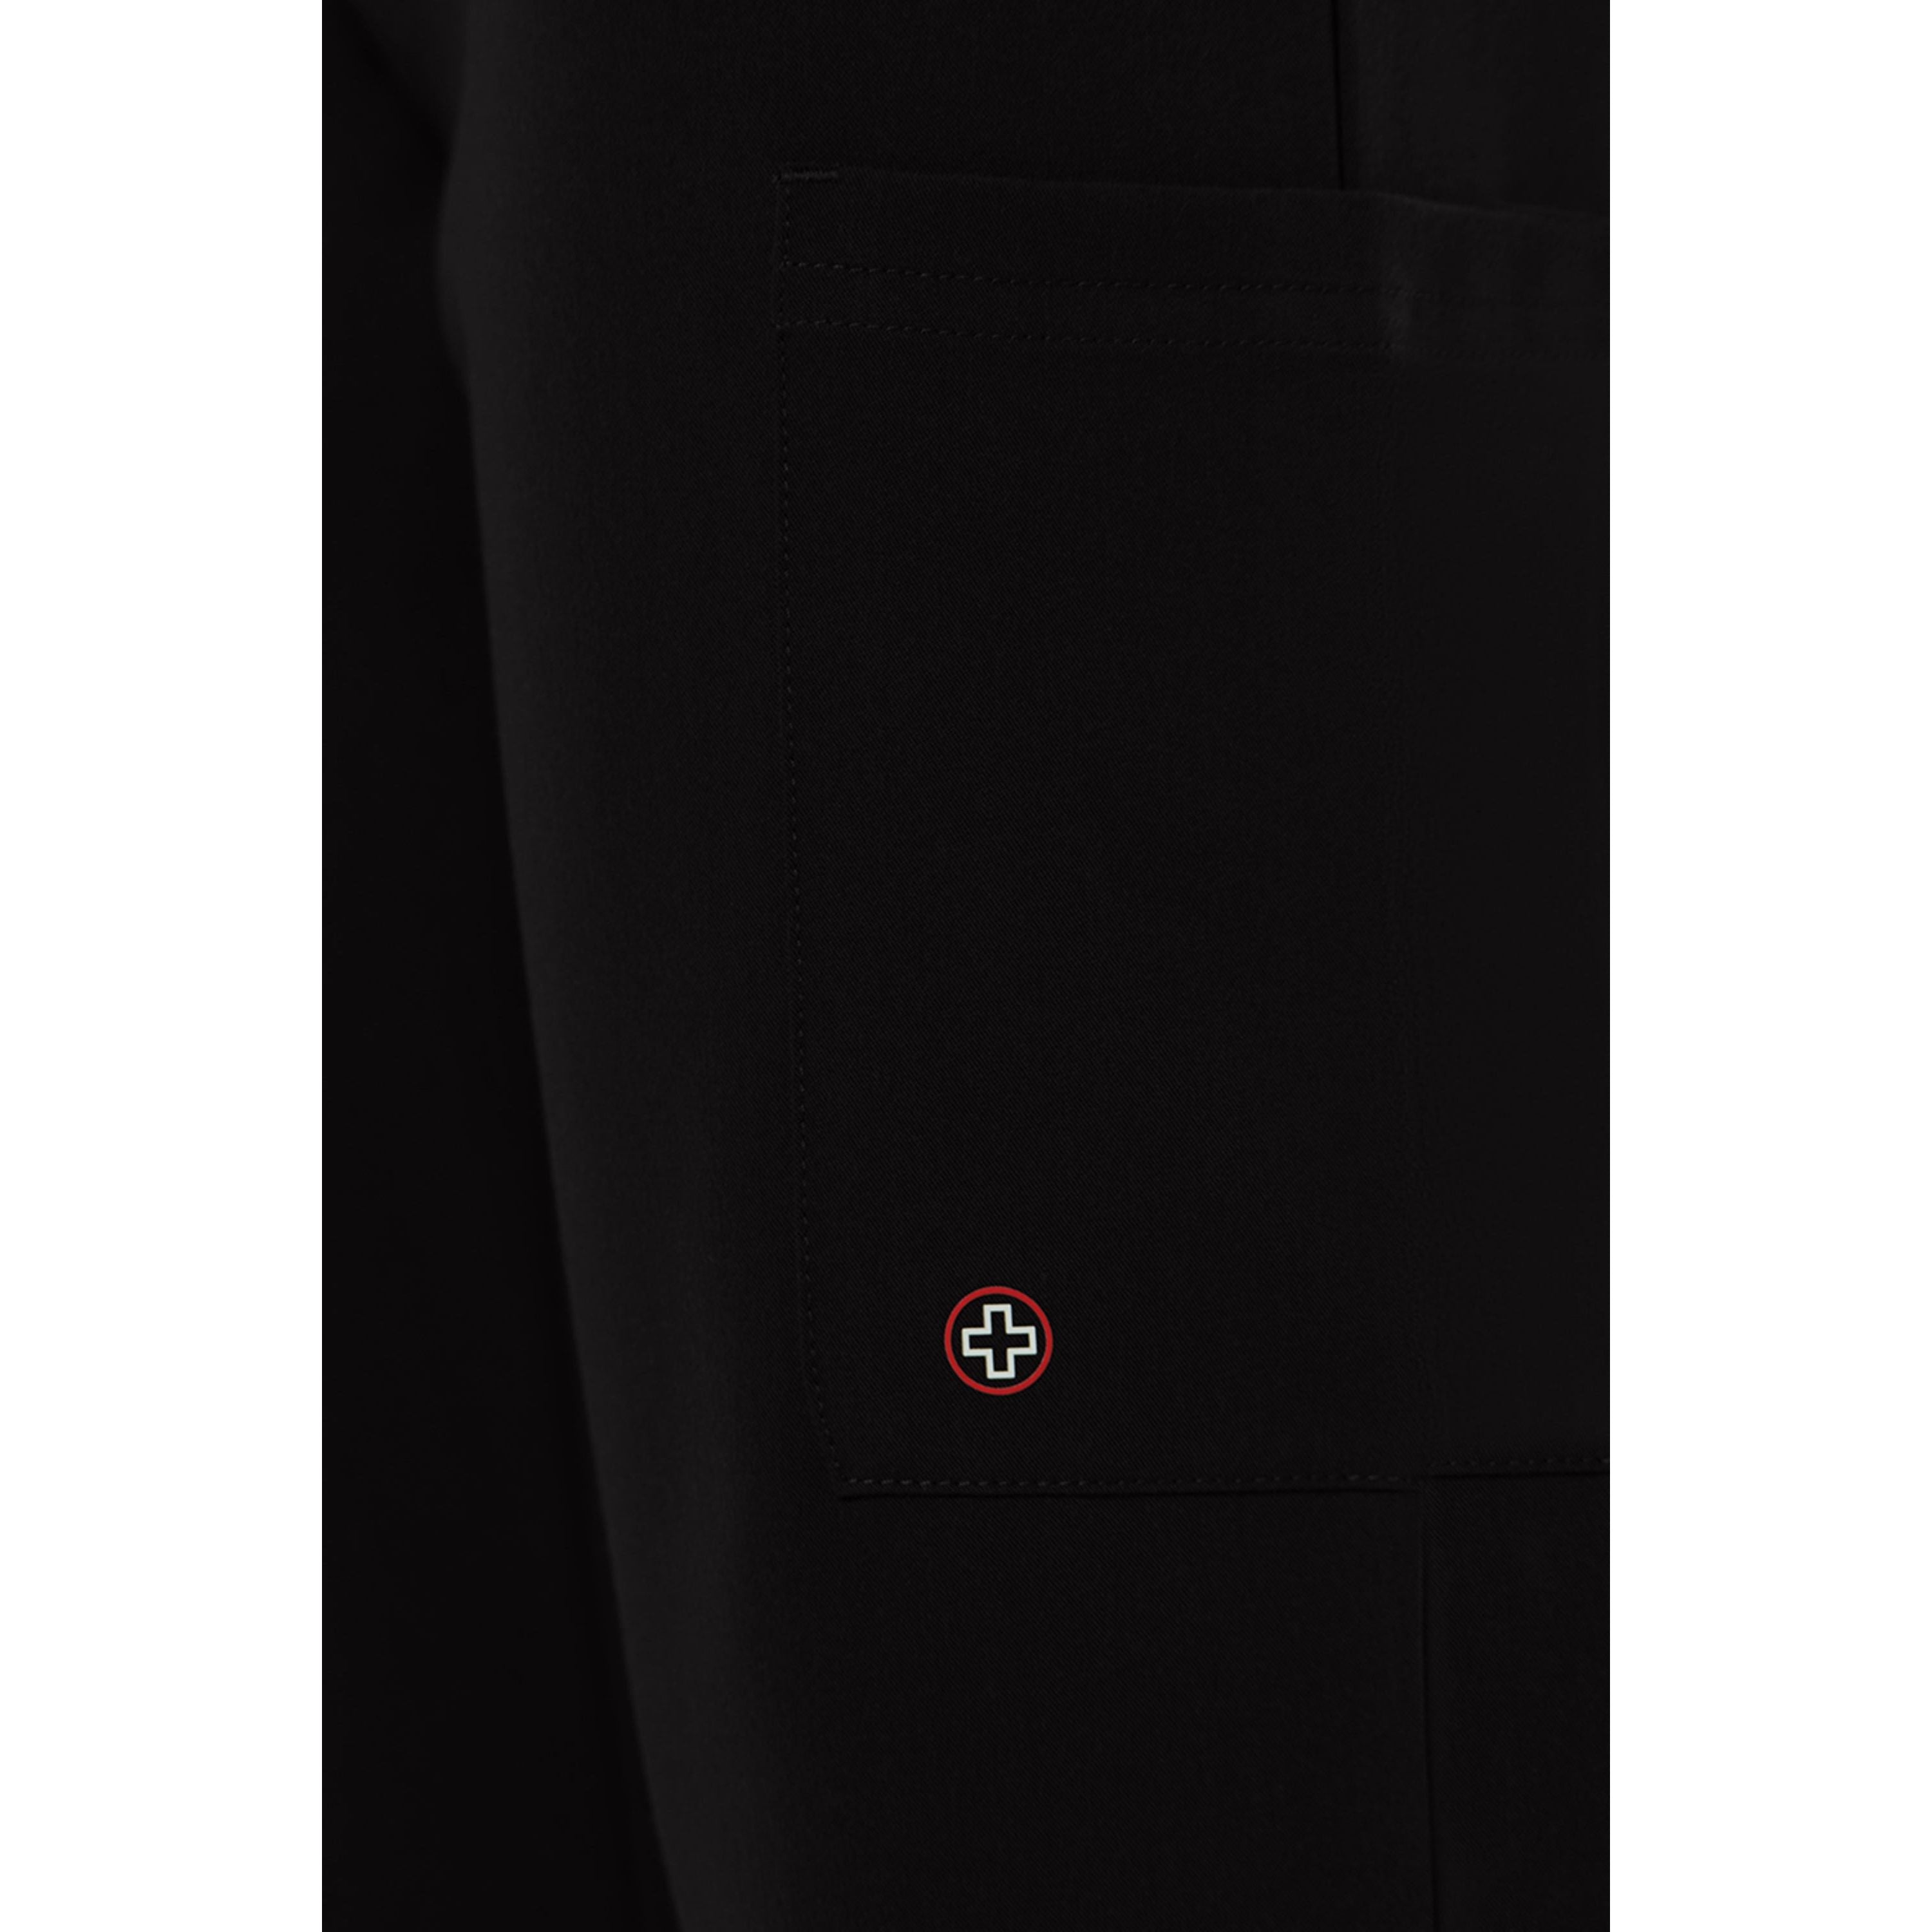 V-TESS Slim Pants 370 Reg Inseam 28 1/2'' "SALE!"